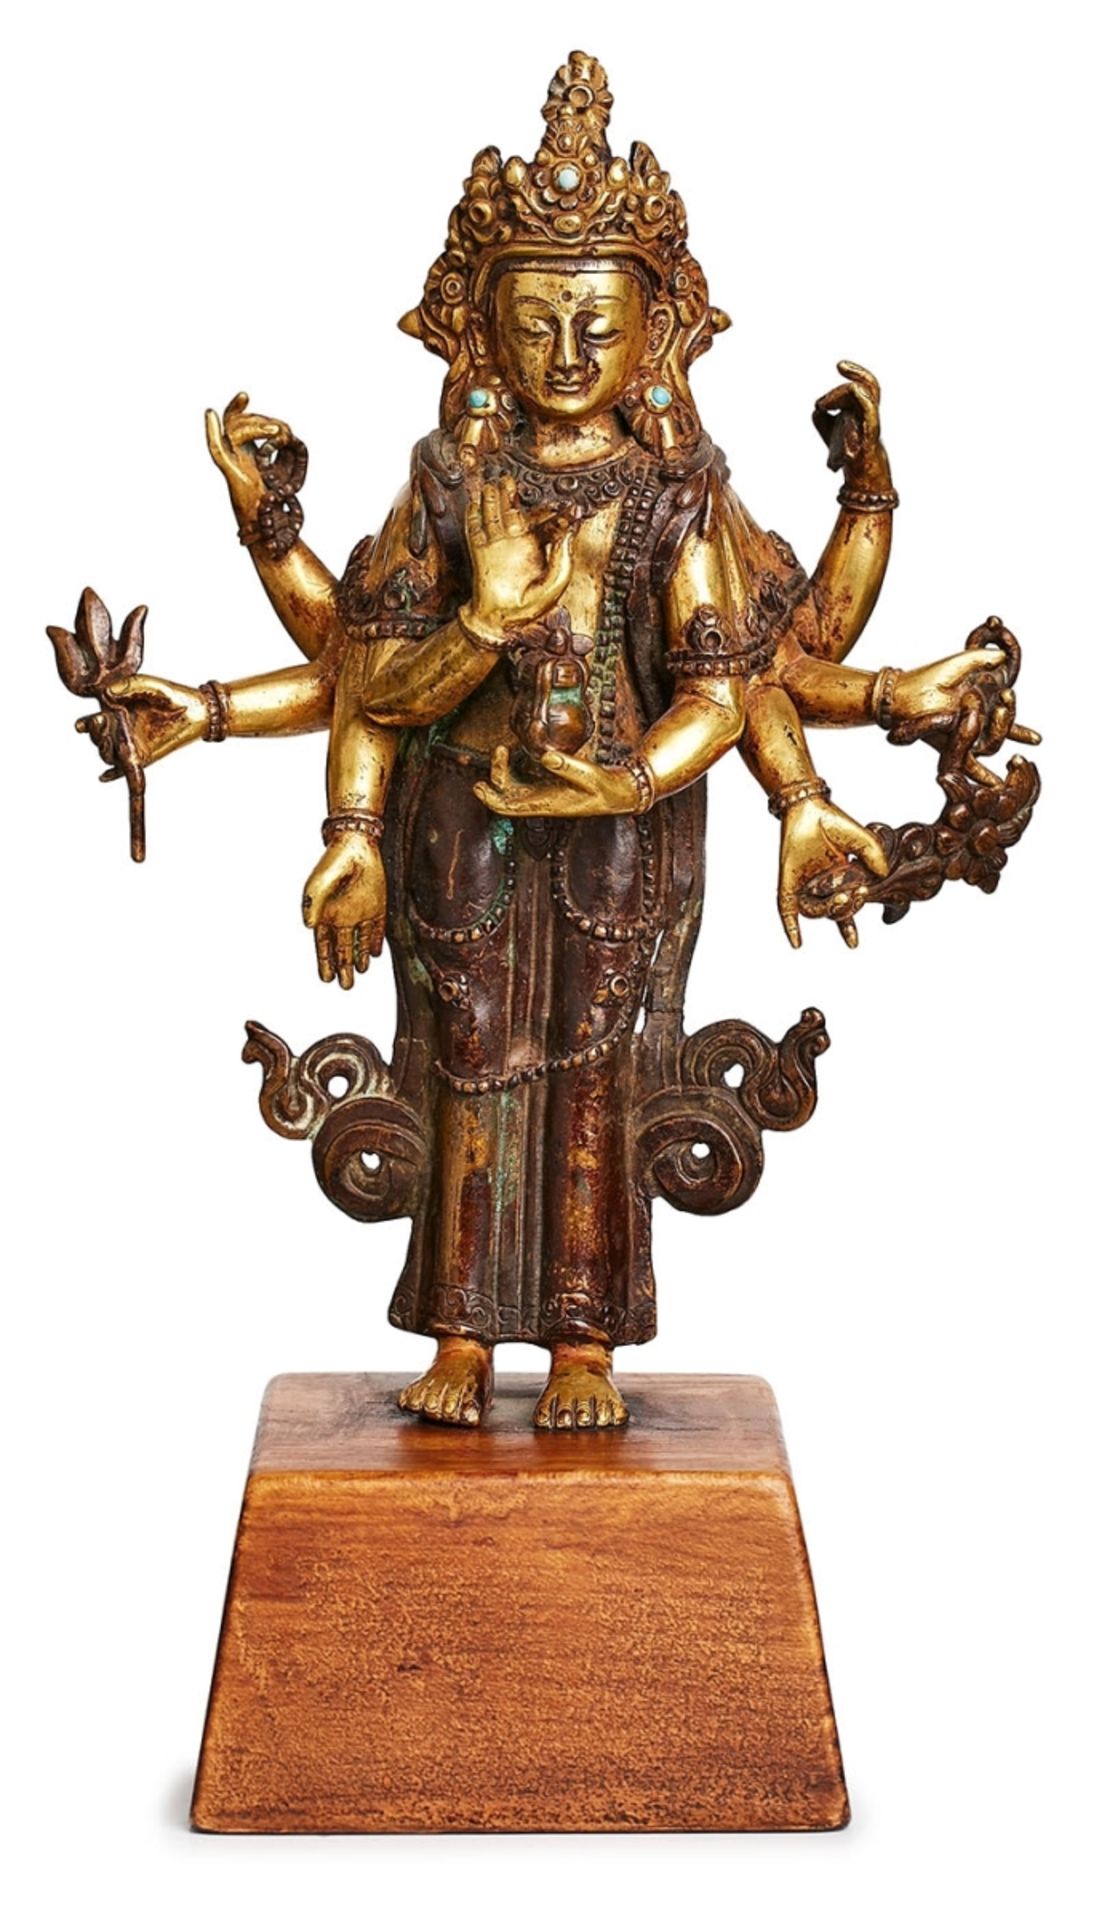 Stehende Göttin, wohl Tibet Anf. 19. Jh.